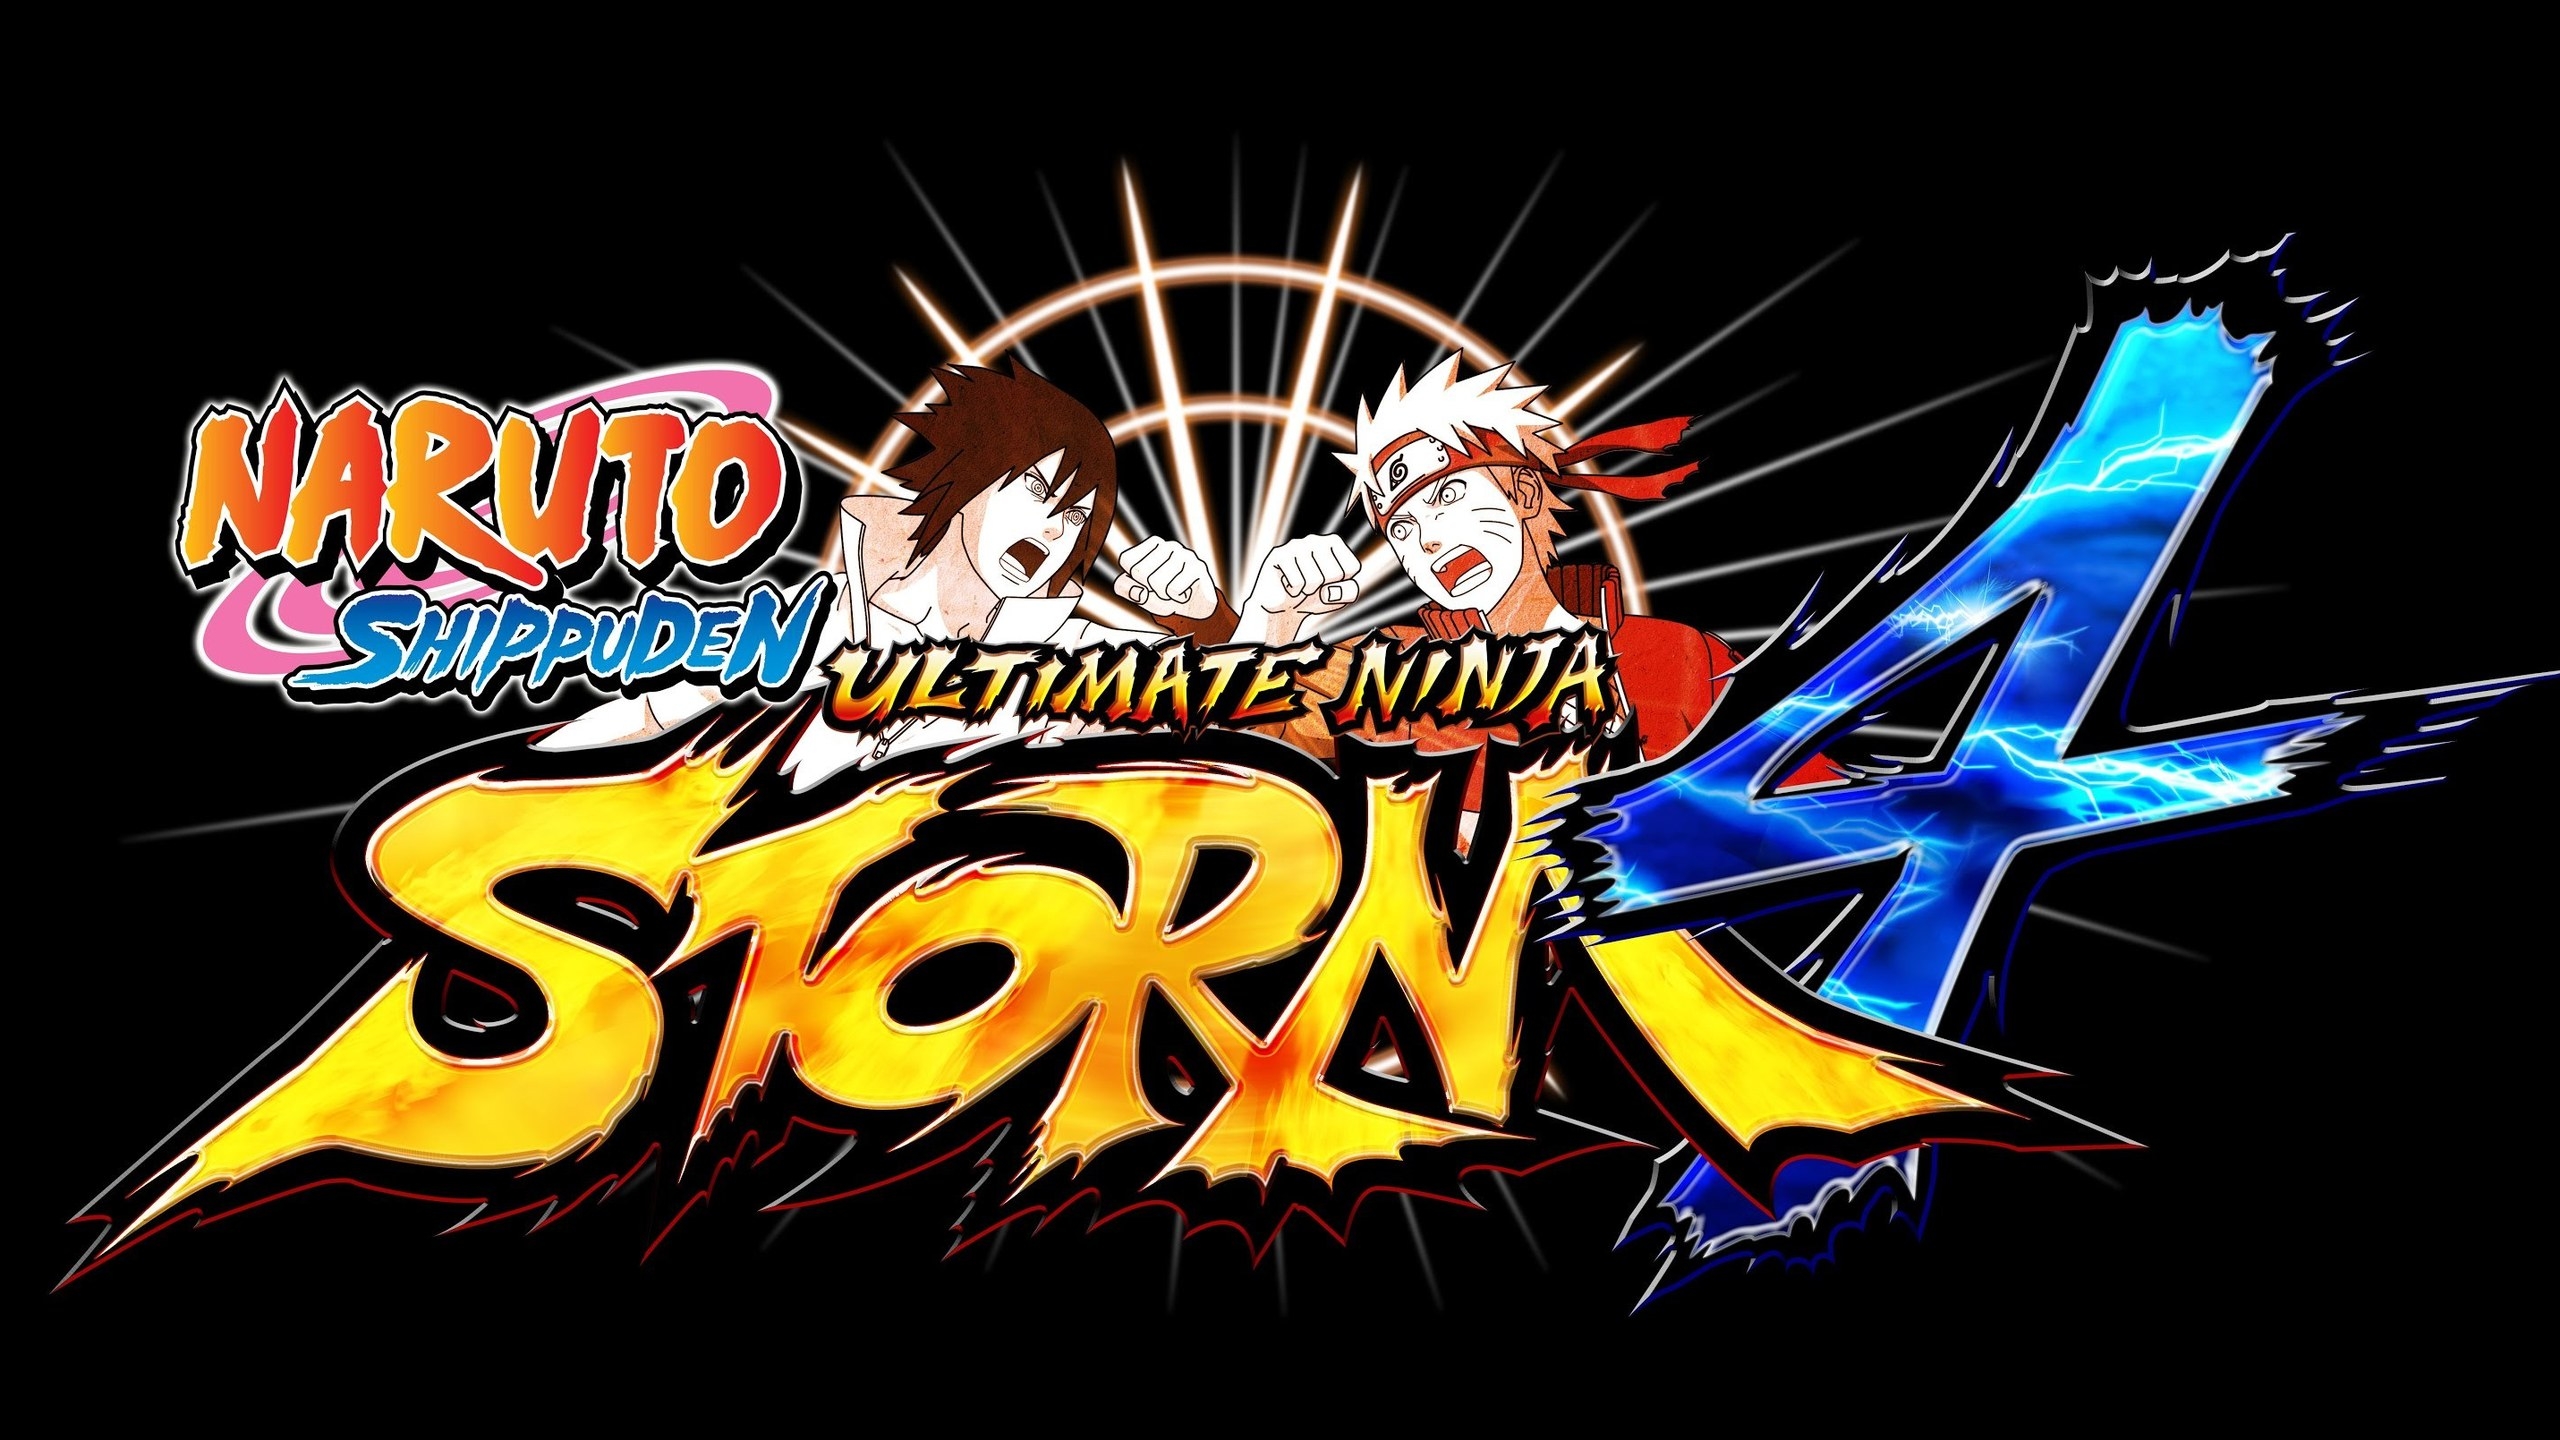 Naruto Shippuden Ultimate Ninja Storm 4 Poster for 2560x1440 HDTV resolution